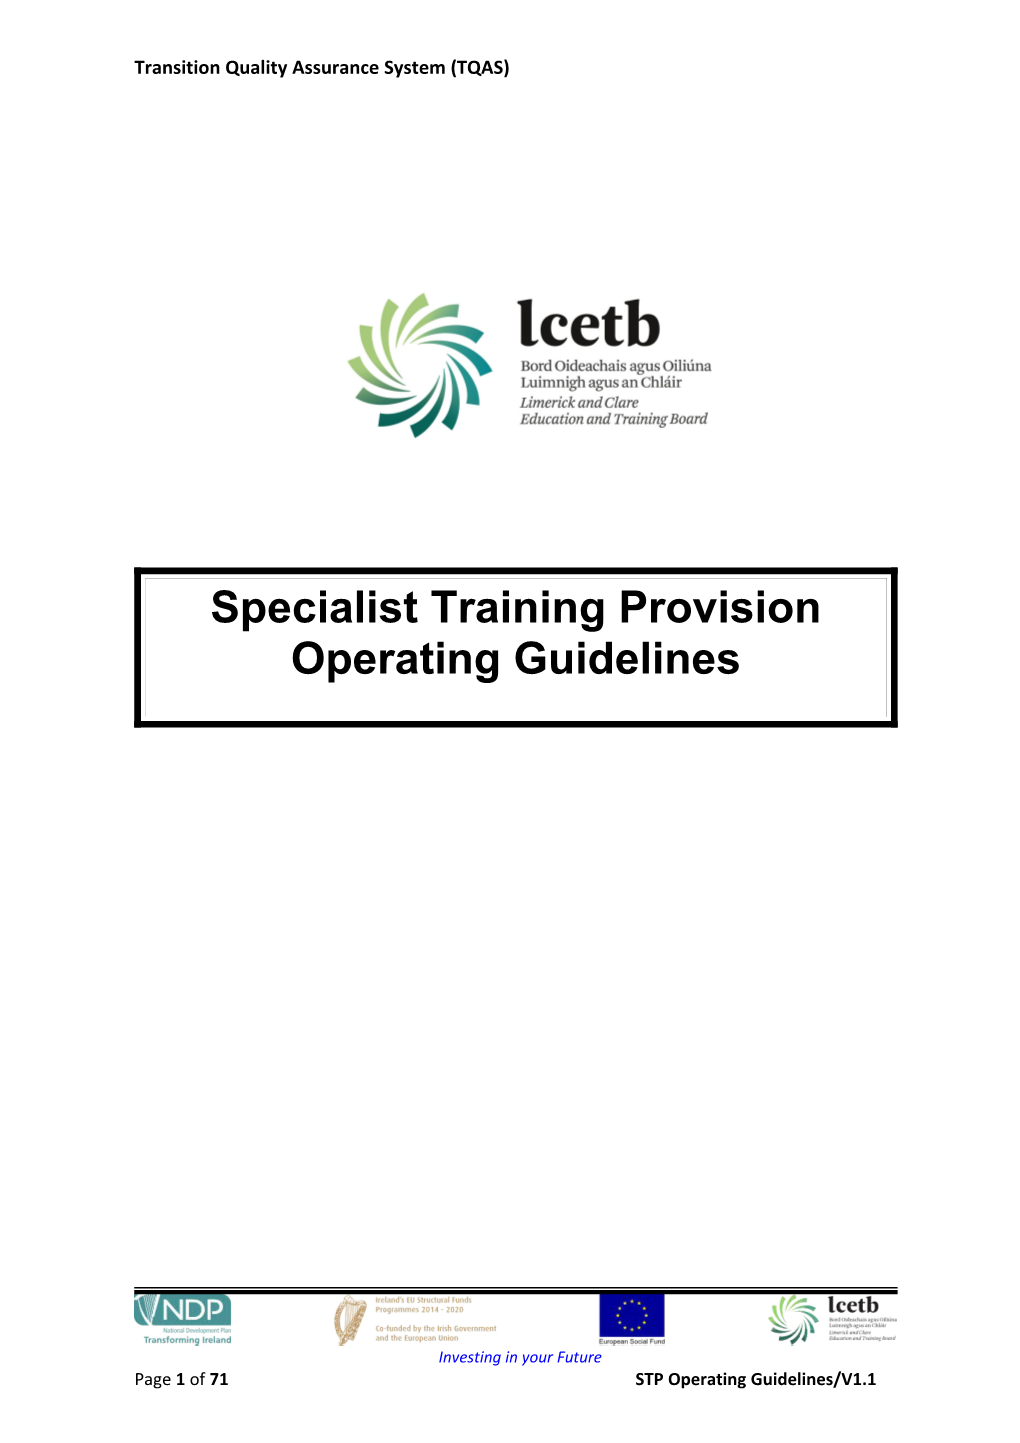 Specialist Training Provision